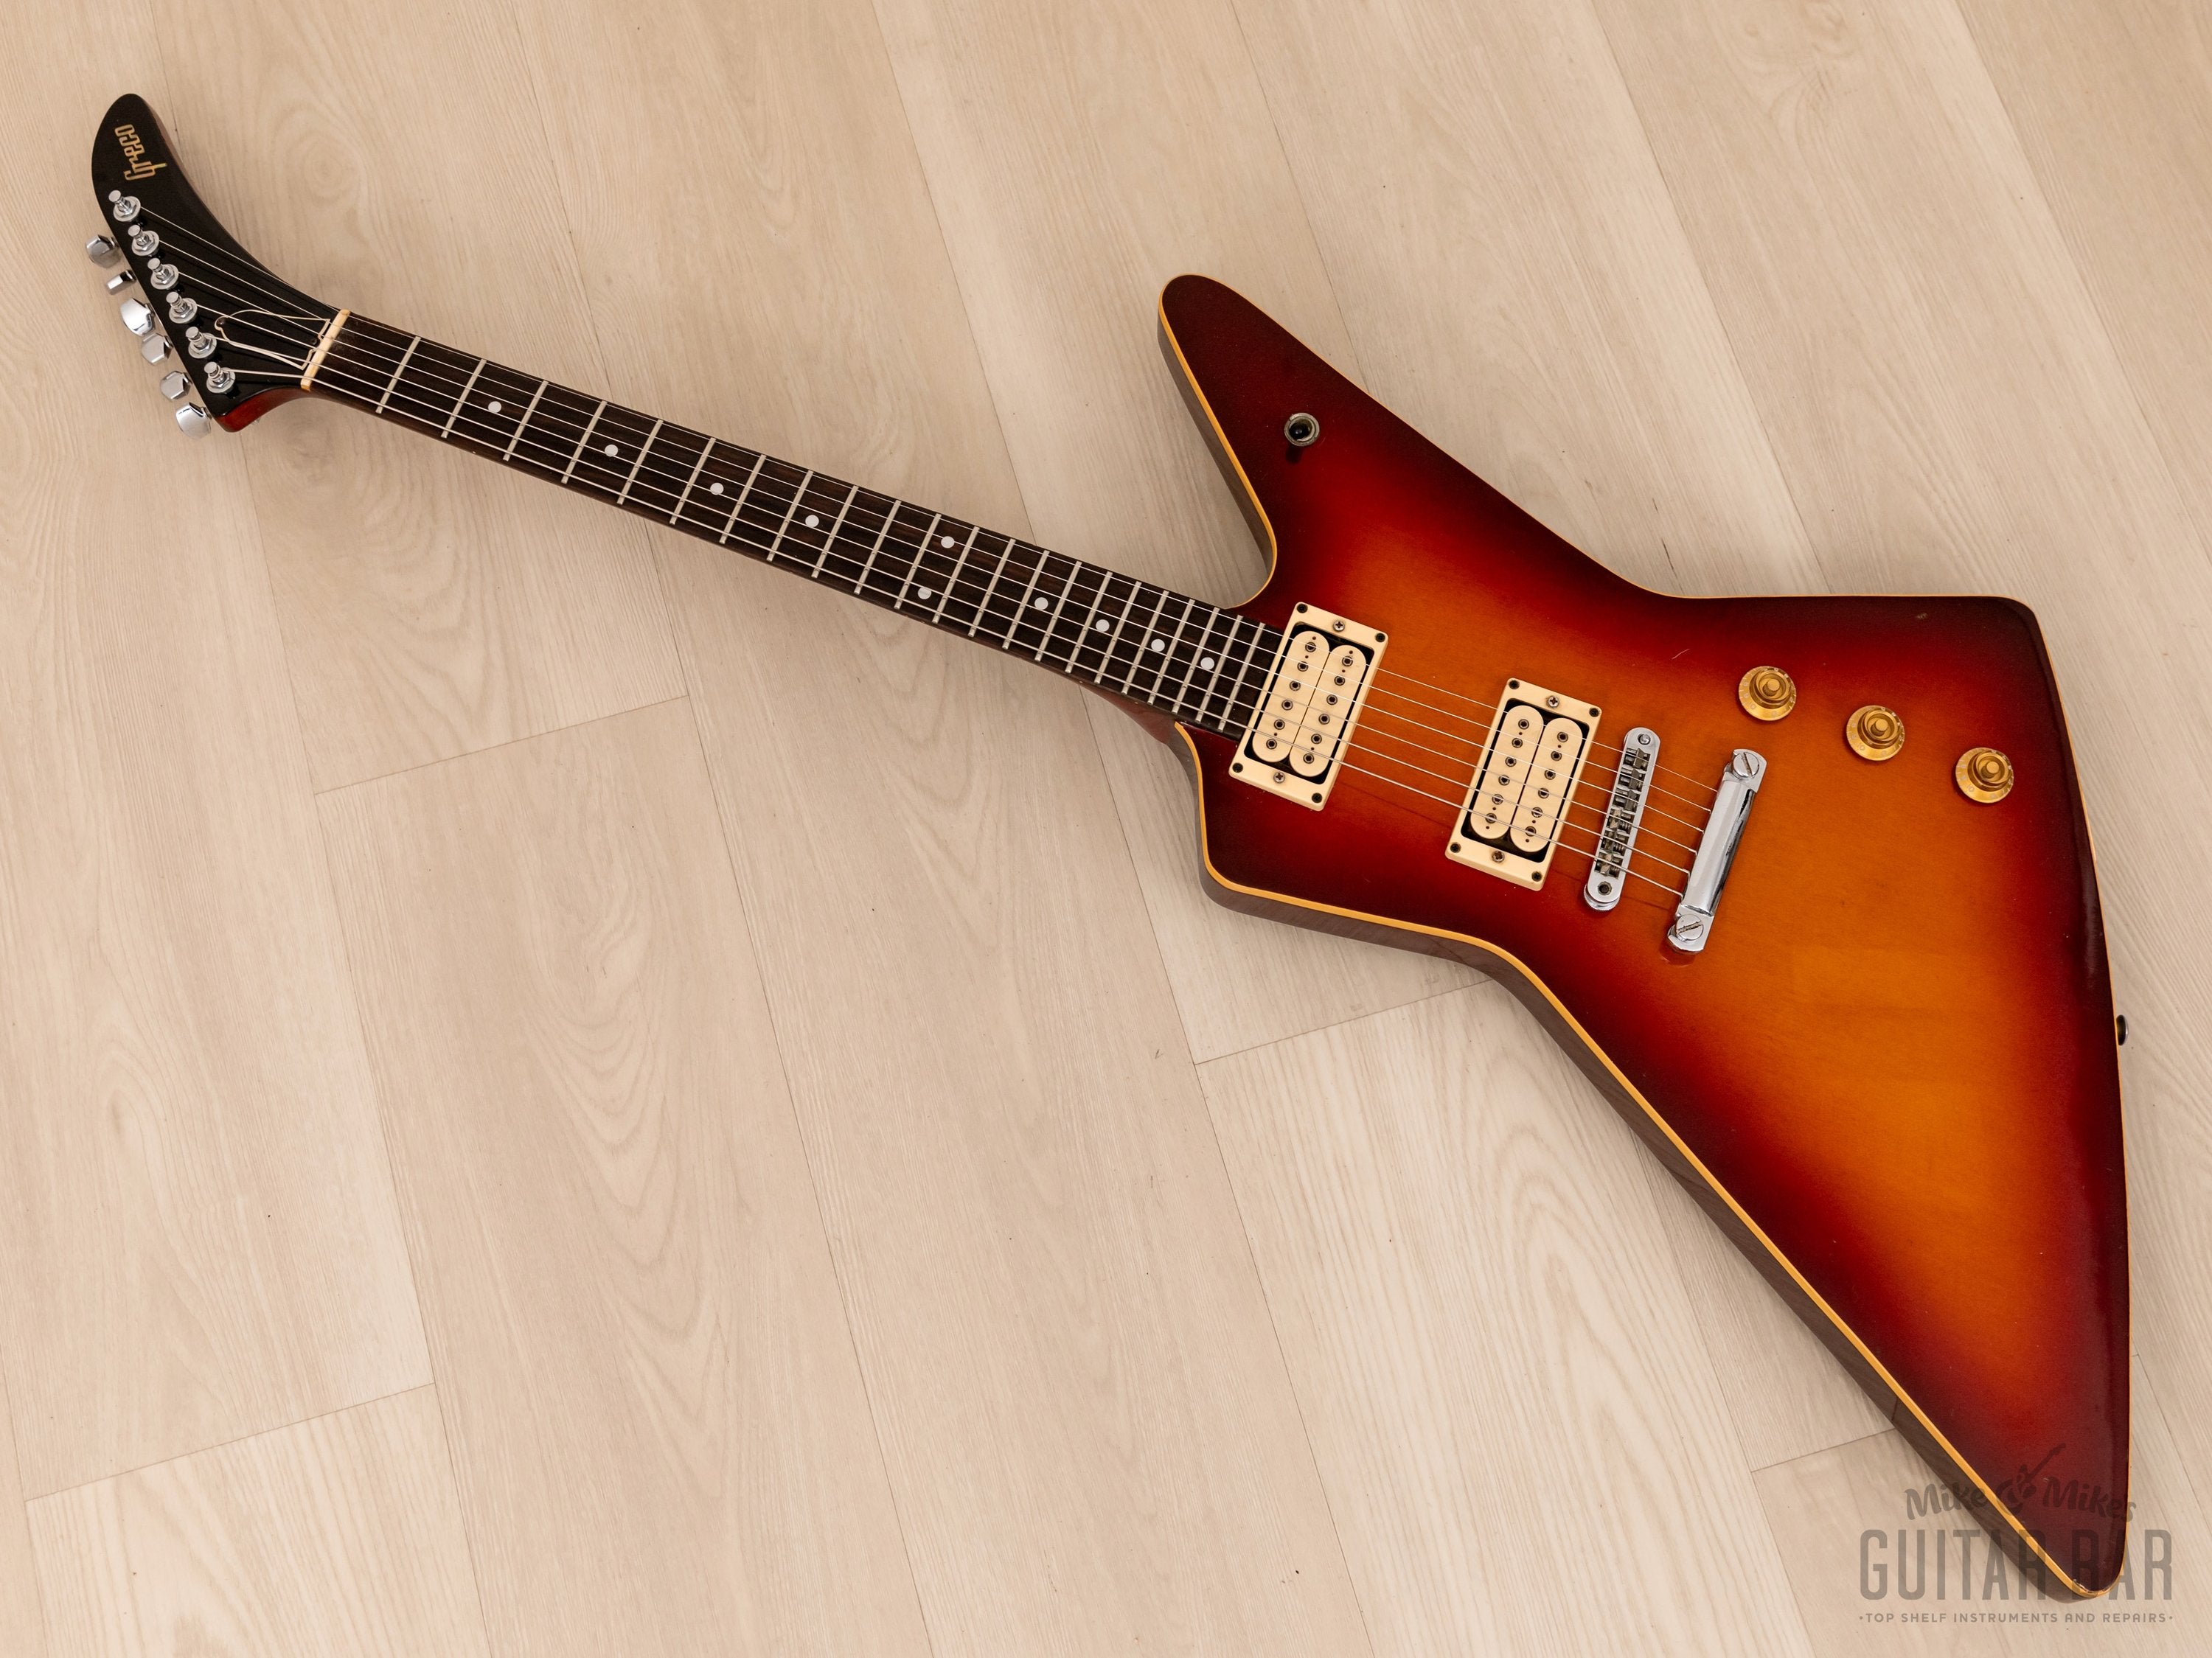 1978 Greco EX800HR Explorer Vintage Guitar Flame Maple Top w/ ESP Pickups & Case, Japan Fujigen